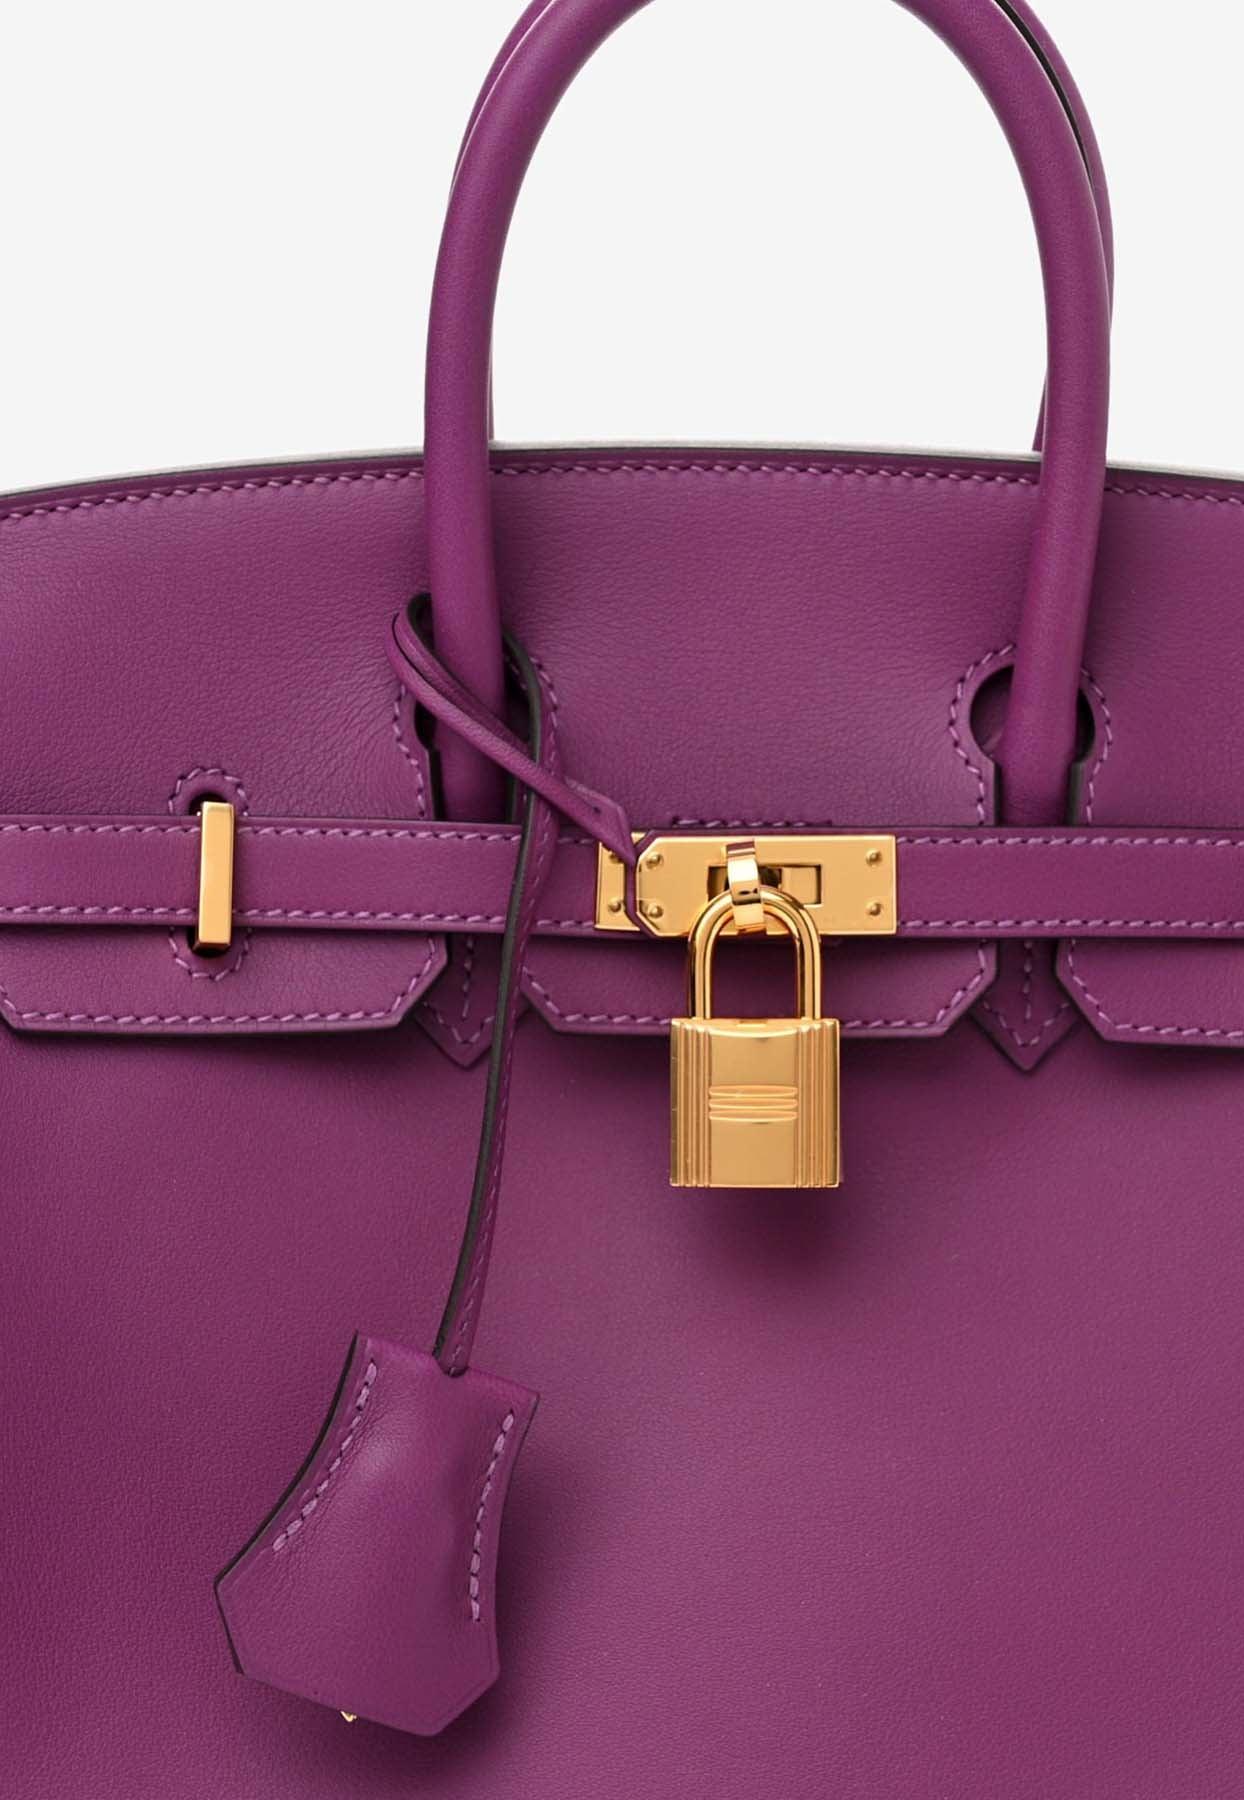 Hermès Birkin 25 In Anemone Swift Leather With Gold Hardware in Purple